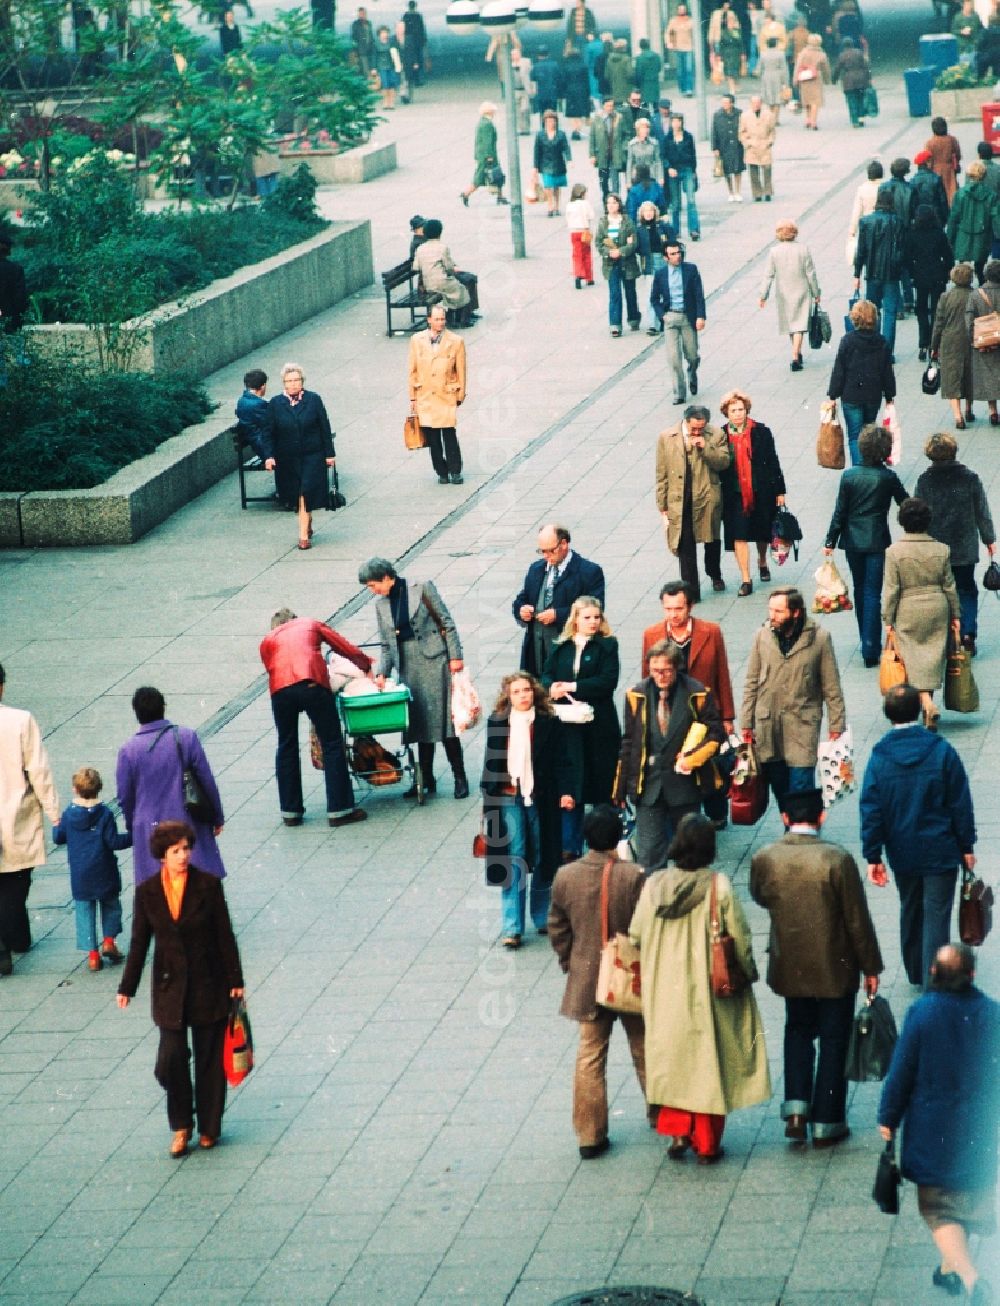 GDR image archive: Berlin - People on the Rathauspassage, Alexpassage at Alexanderplatz in Berlin